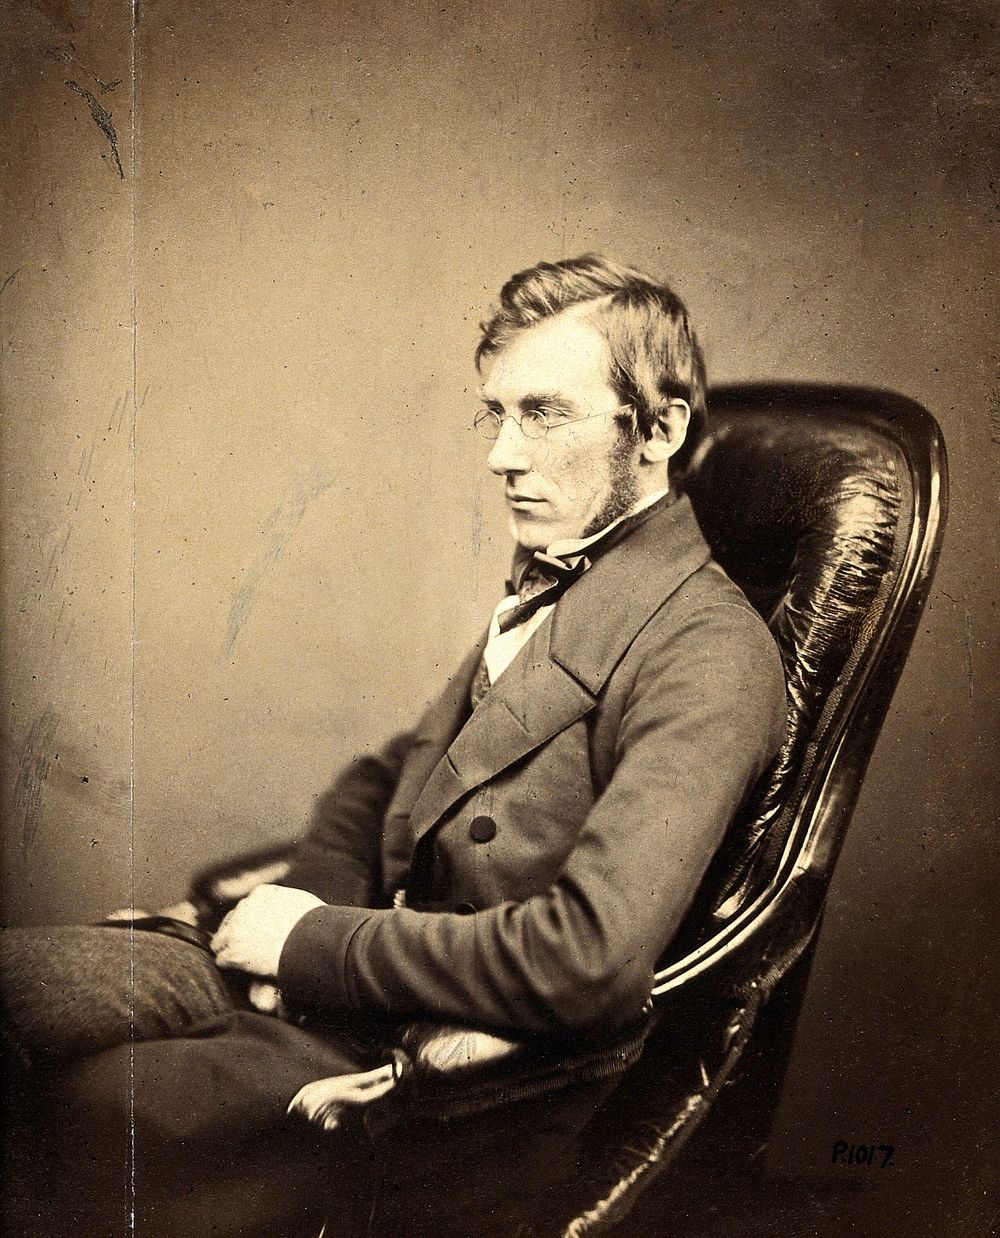 Sir Joseph Dalton Hooker. Photograph.